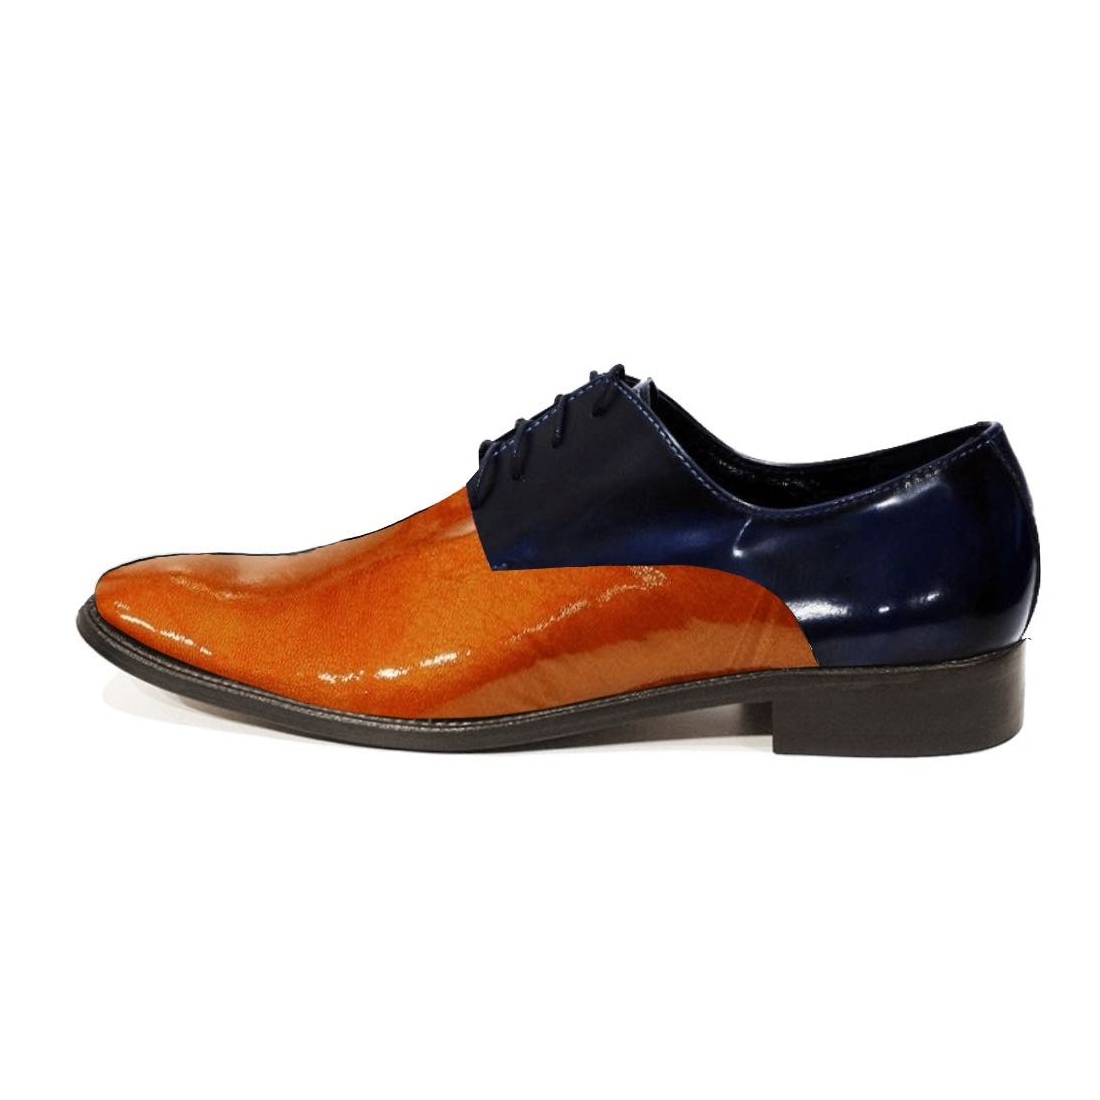 Modello Porellgo - Classic Shoes - Handmade Colorful Italian Leather Shoes